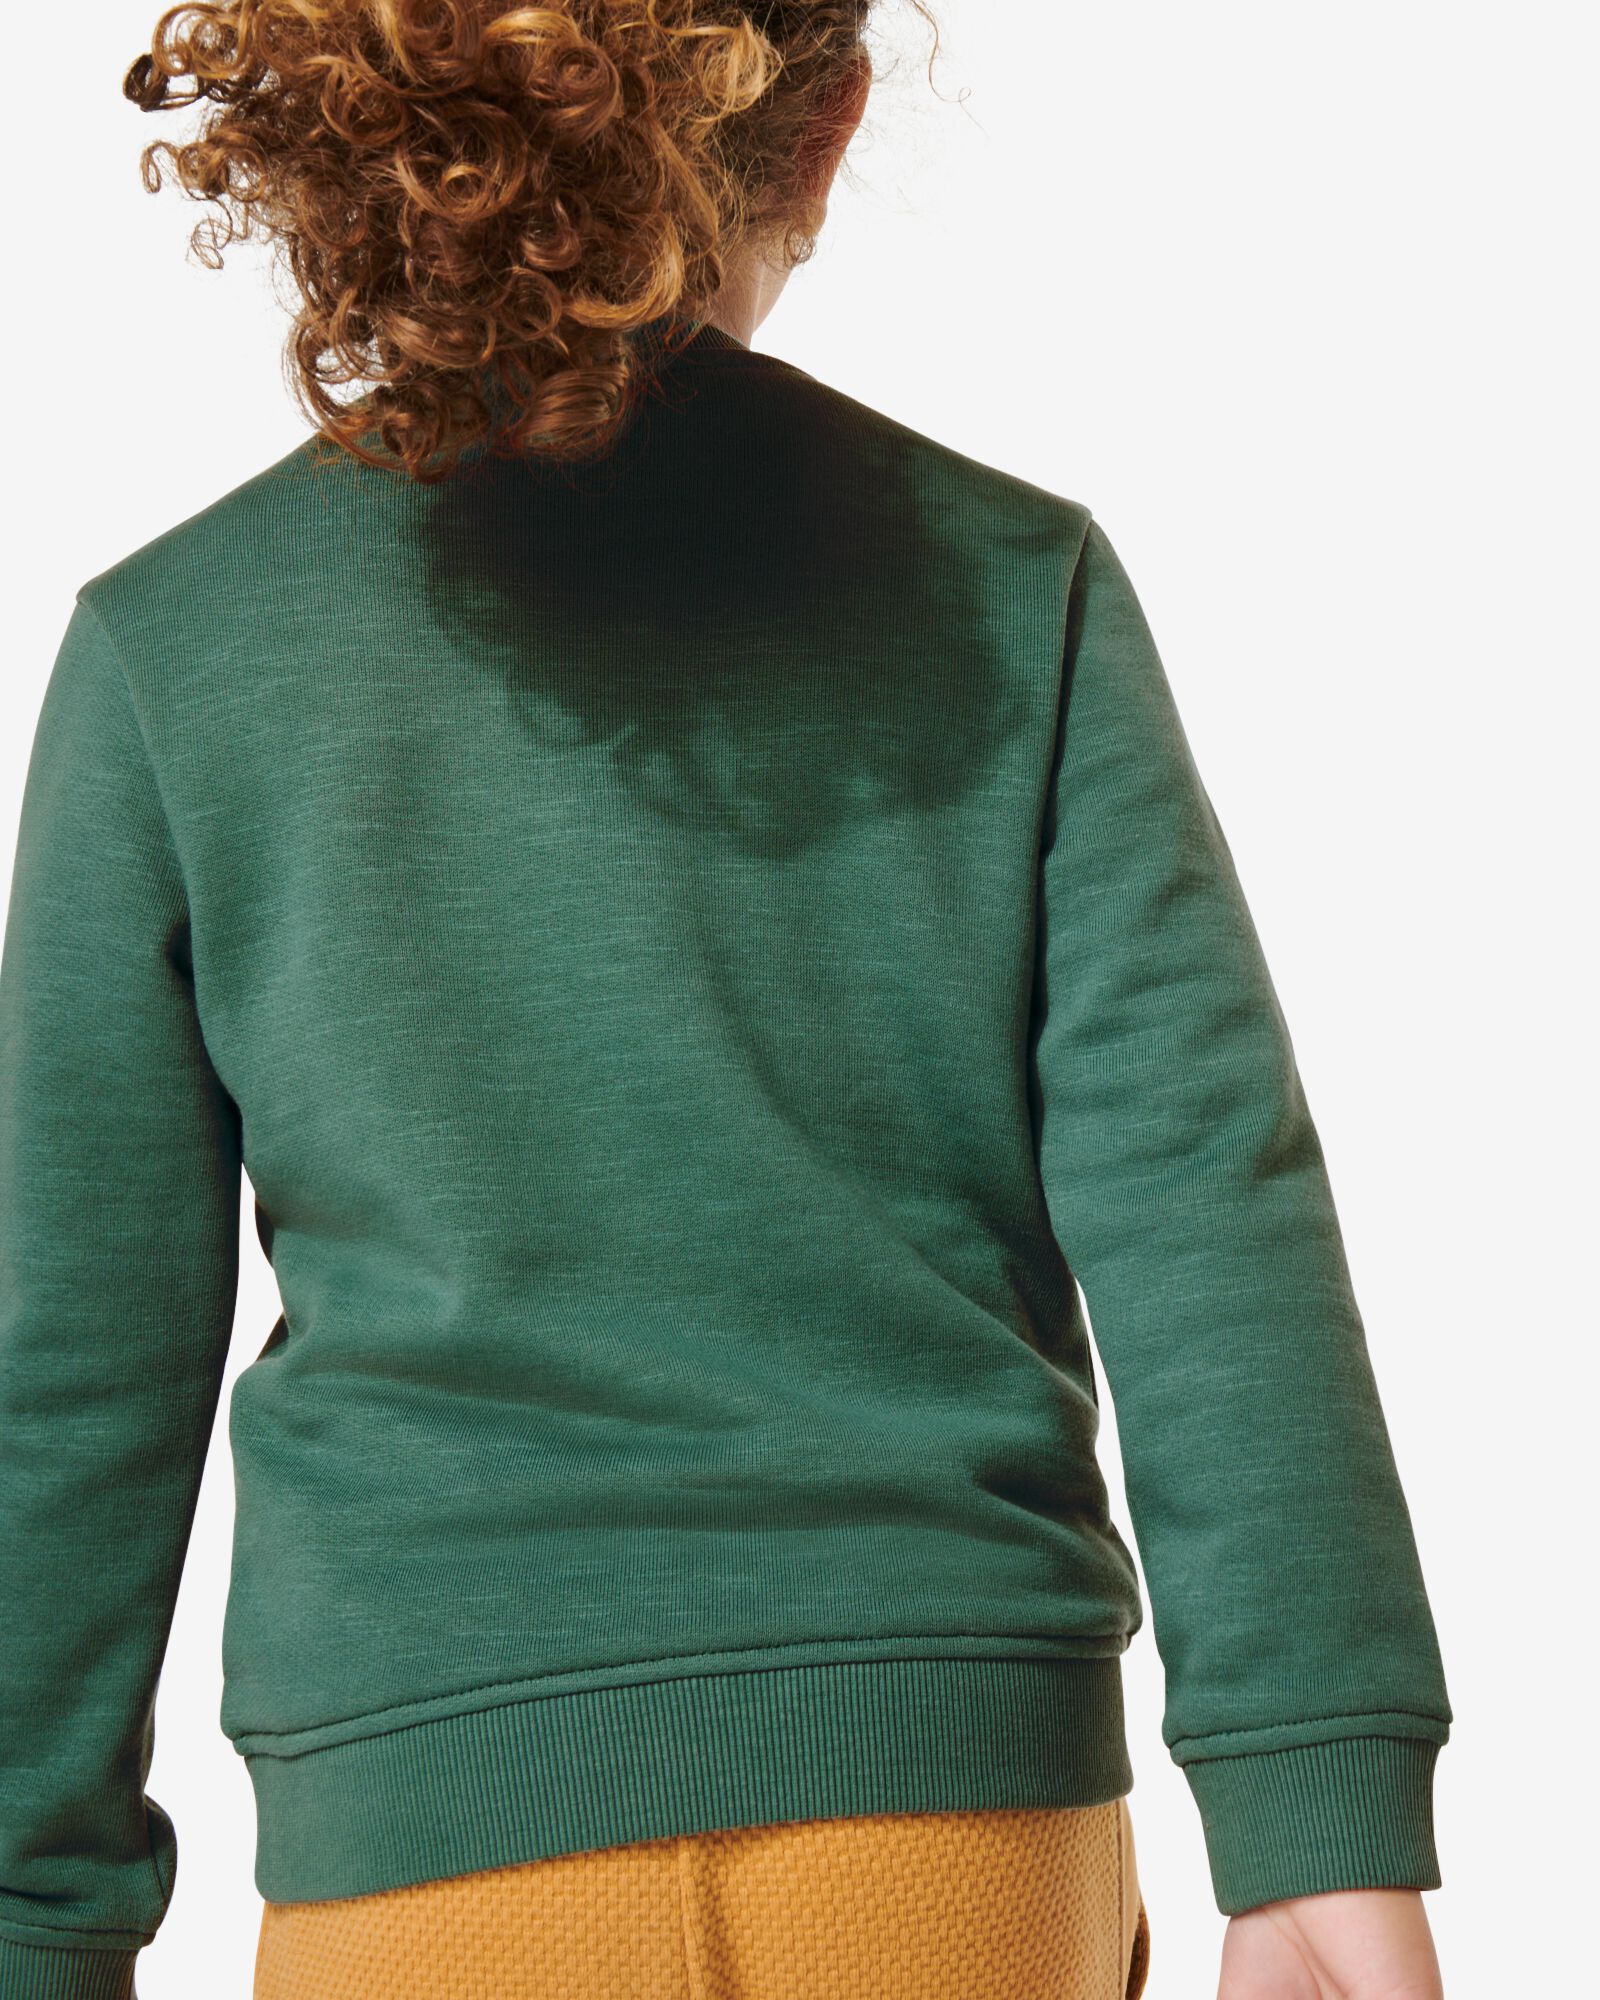 sweat-shirt enfant avec poche de poitrine vert - 1000029808 - HEMA